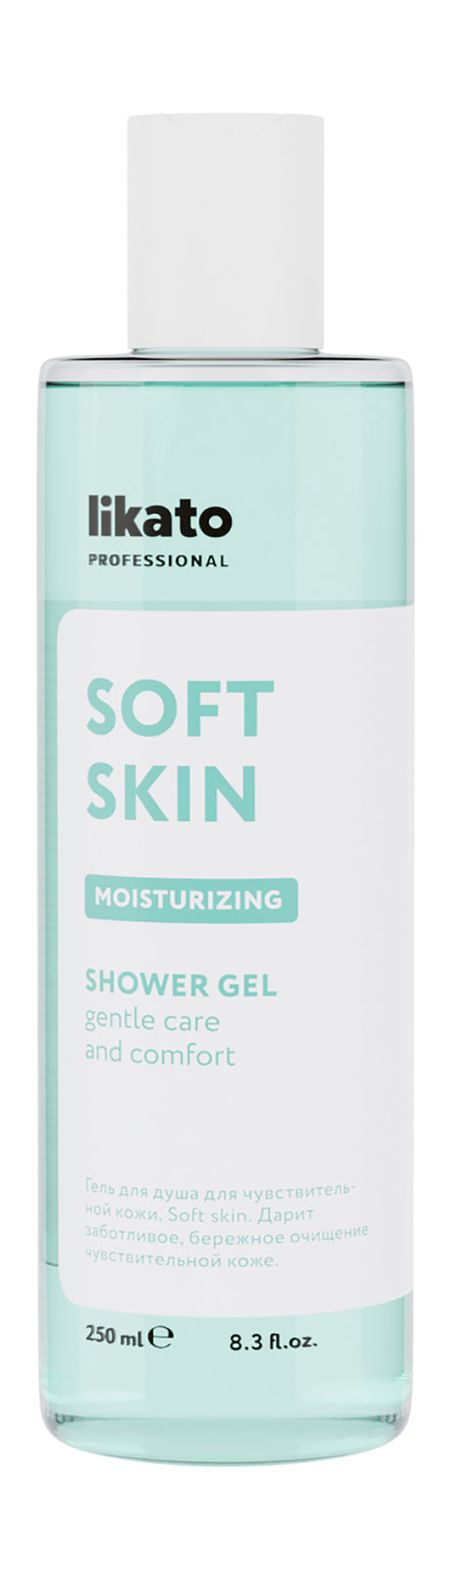 likato professional soft skin moisturizing shower gel